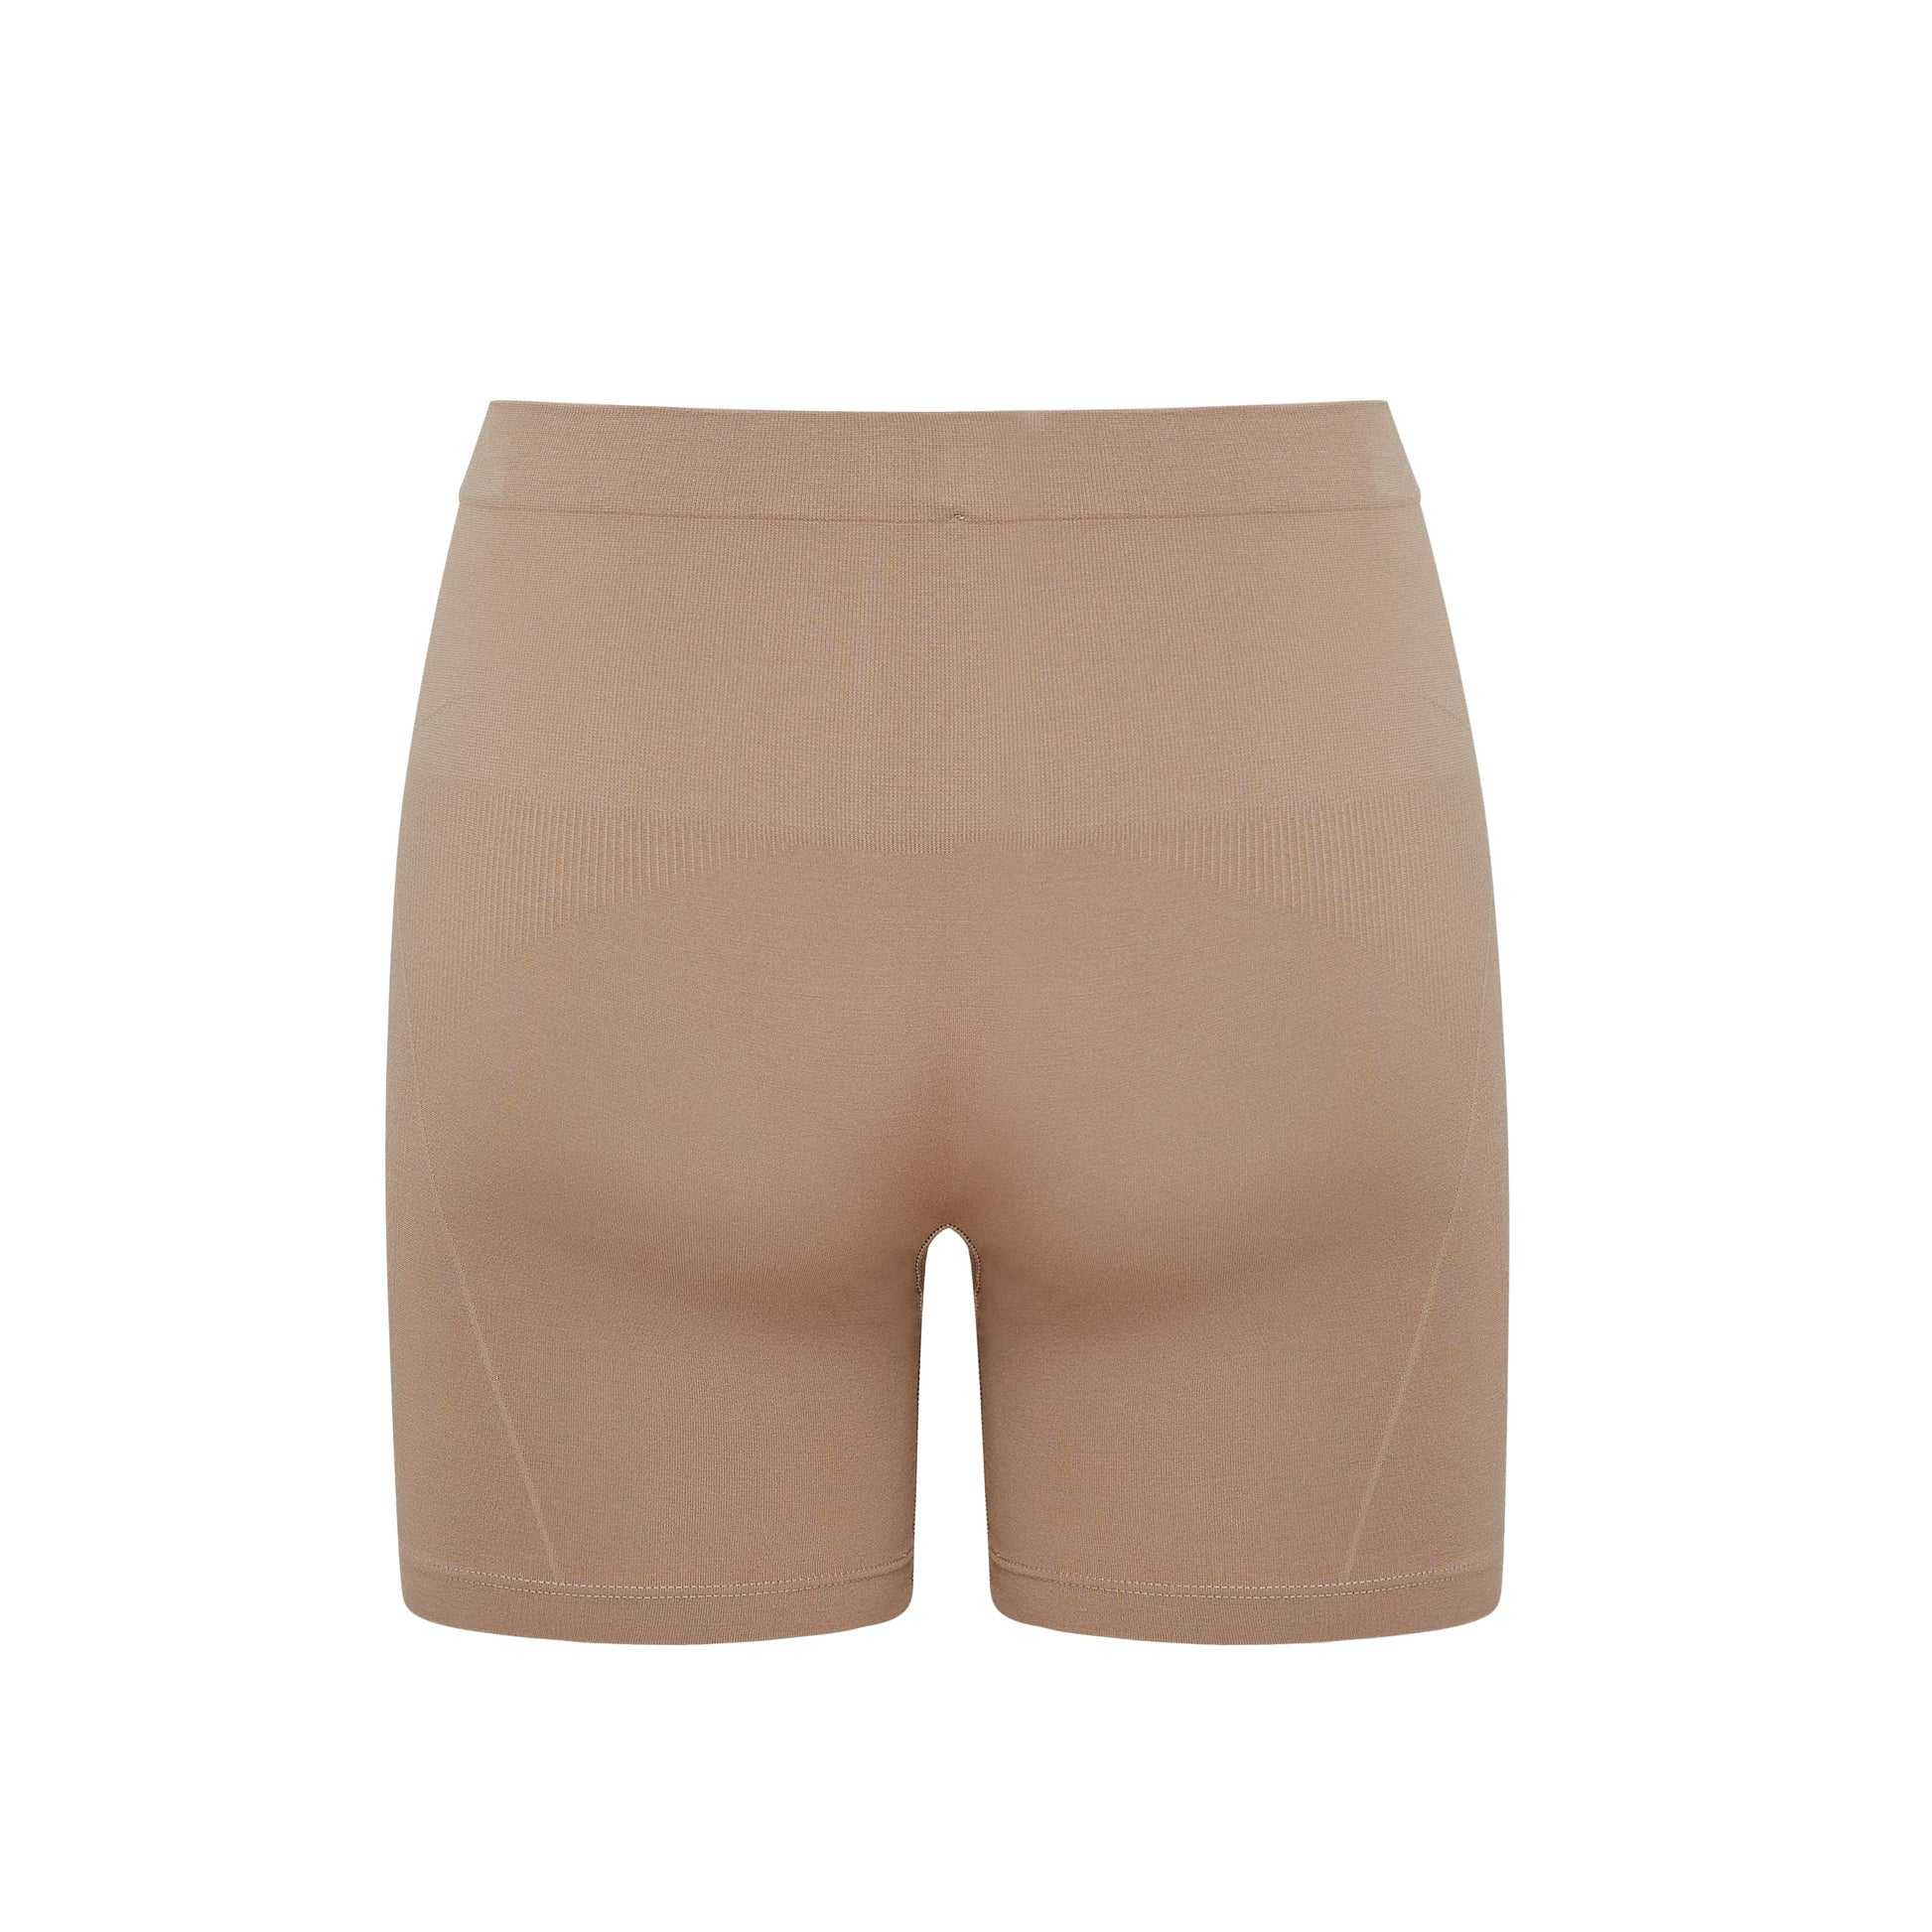 flat lay image of tan shorts from back